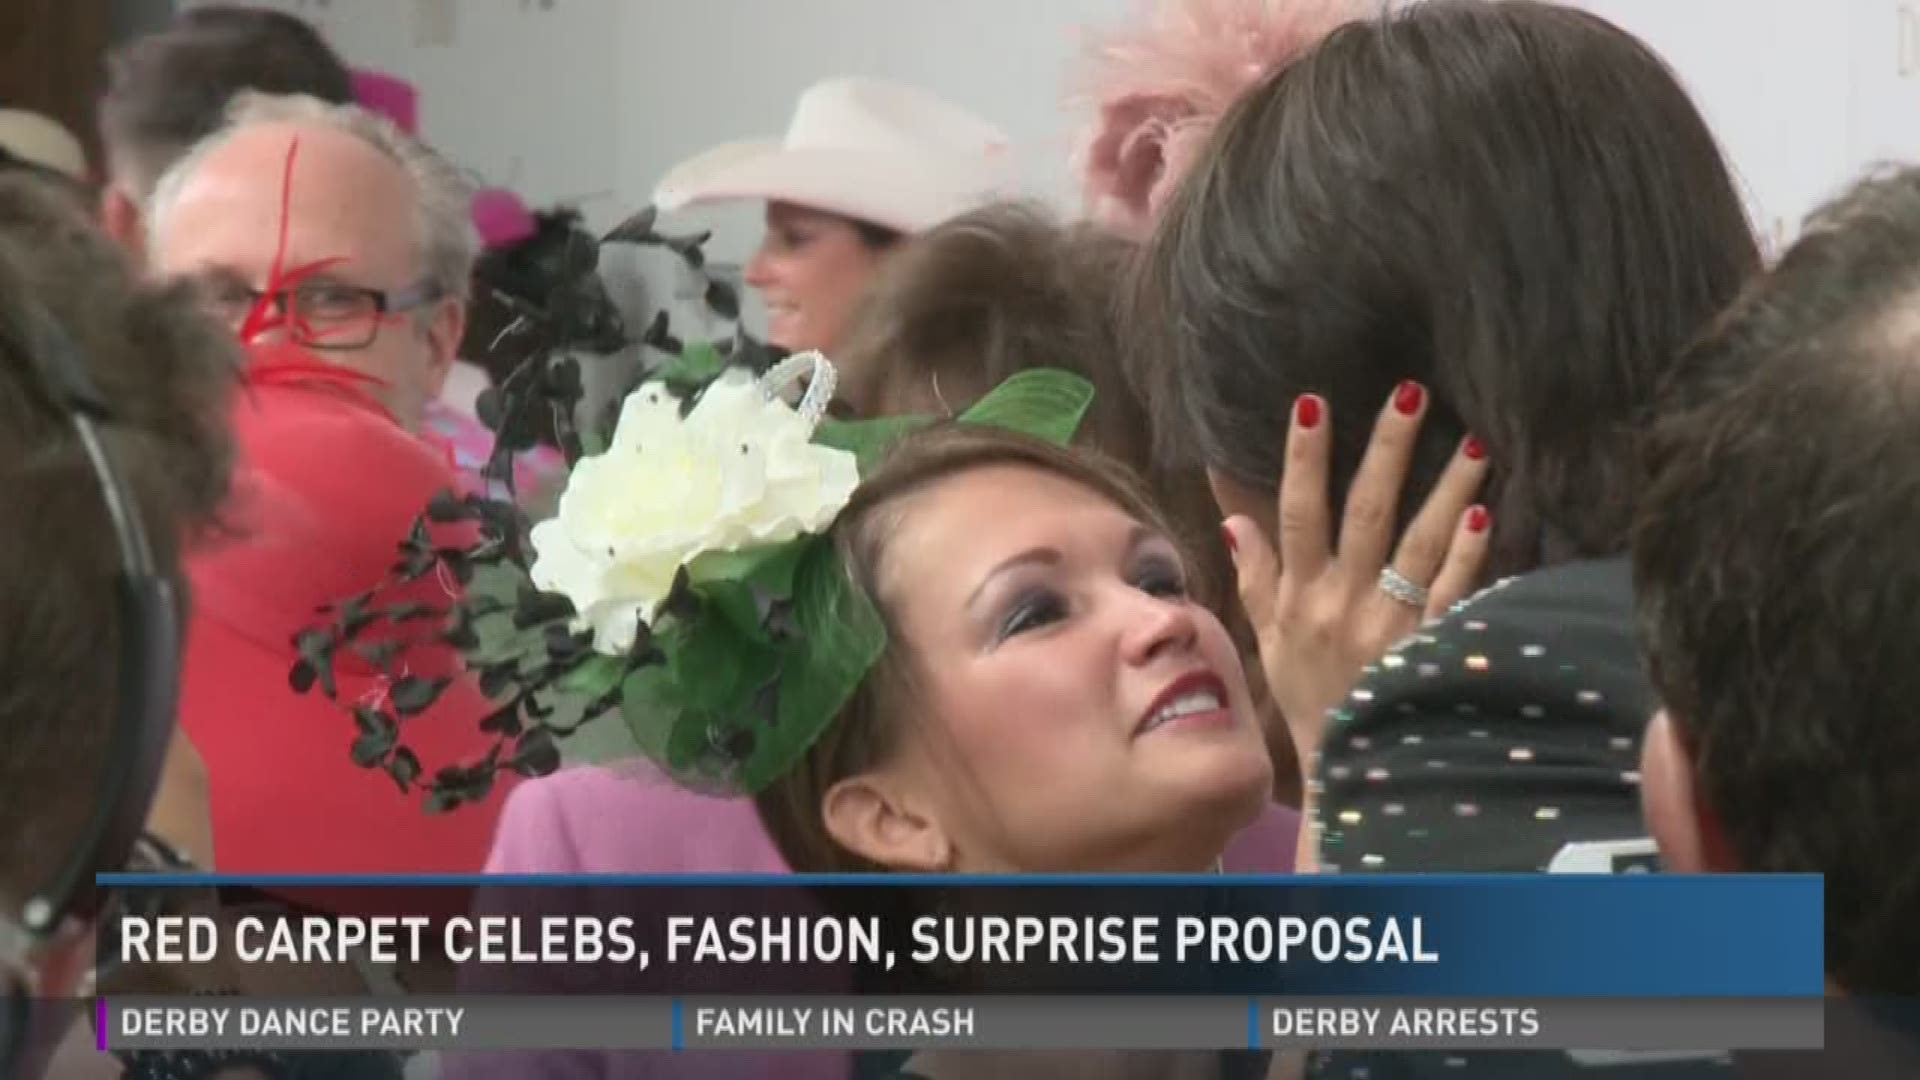 Red carpet celebs, fashion, surprise proposal